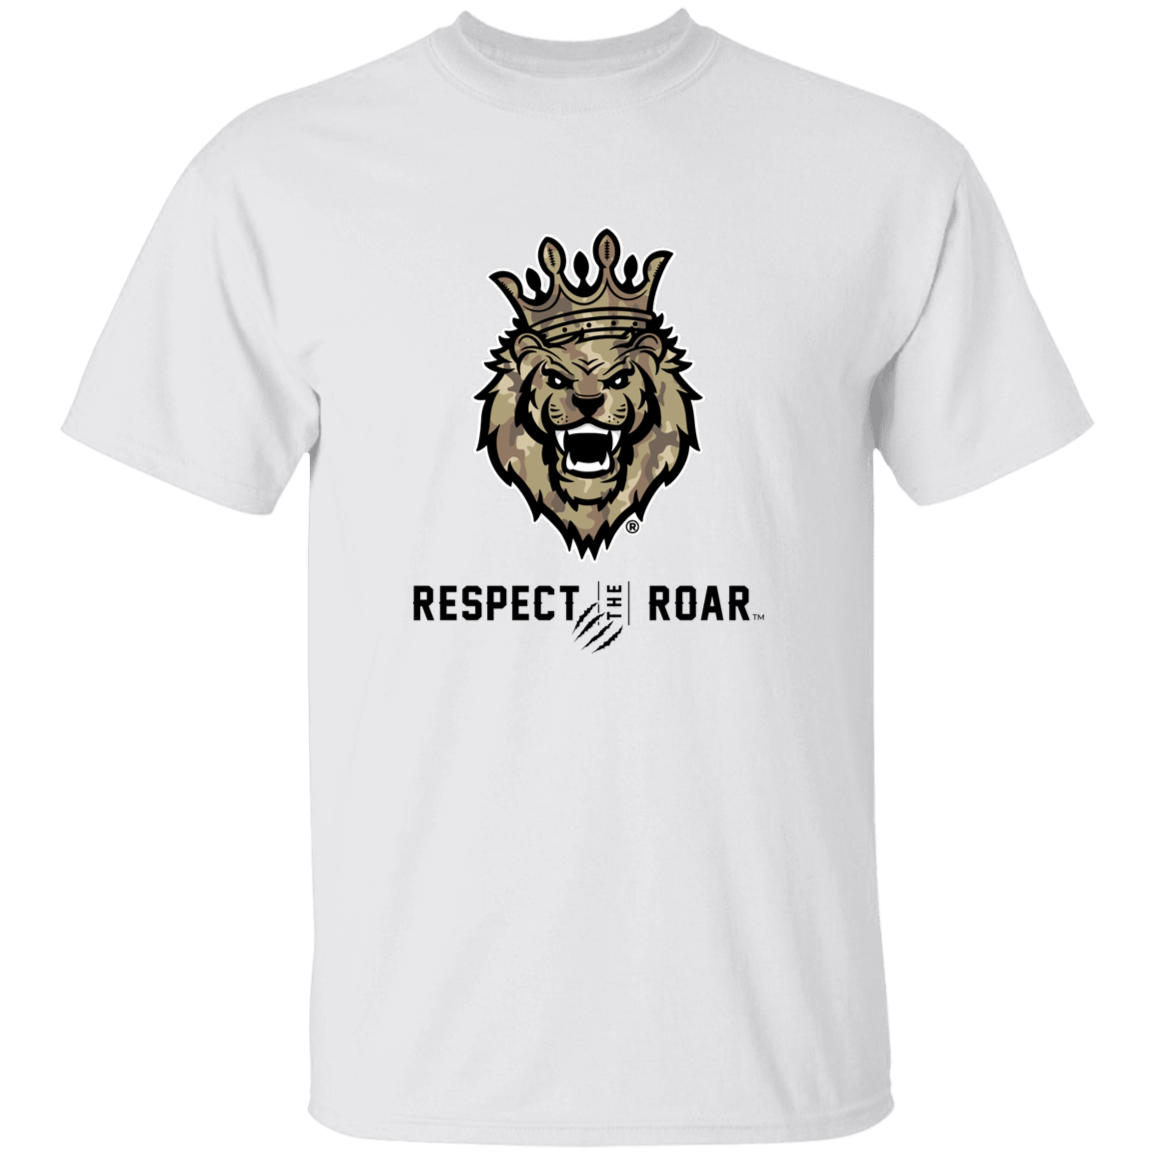 Respect The Roar (Tan) - G500B Youth 5.3 oz 100% Cotton T-Shirt